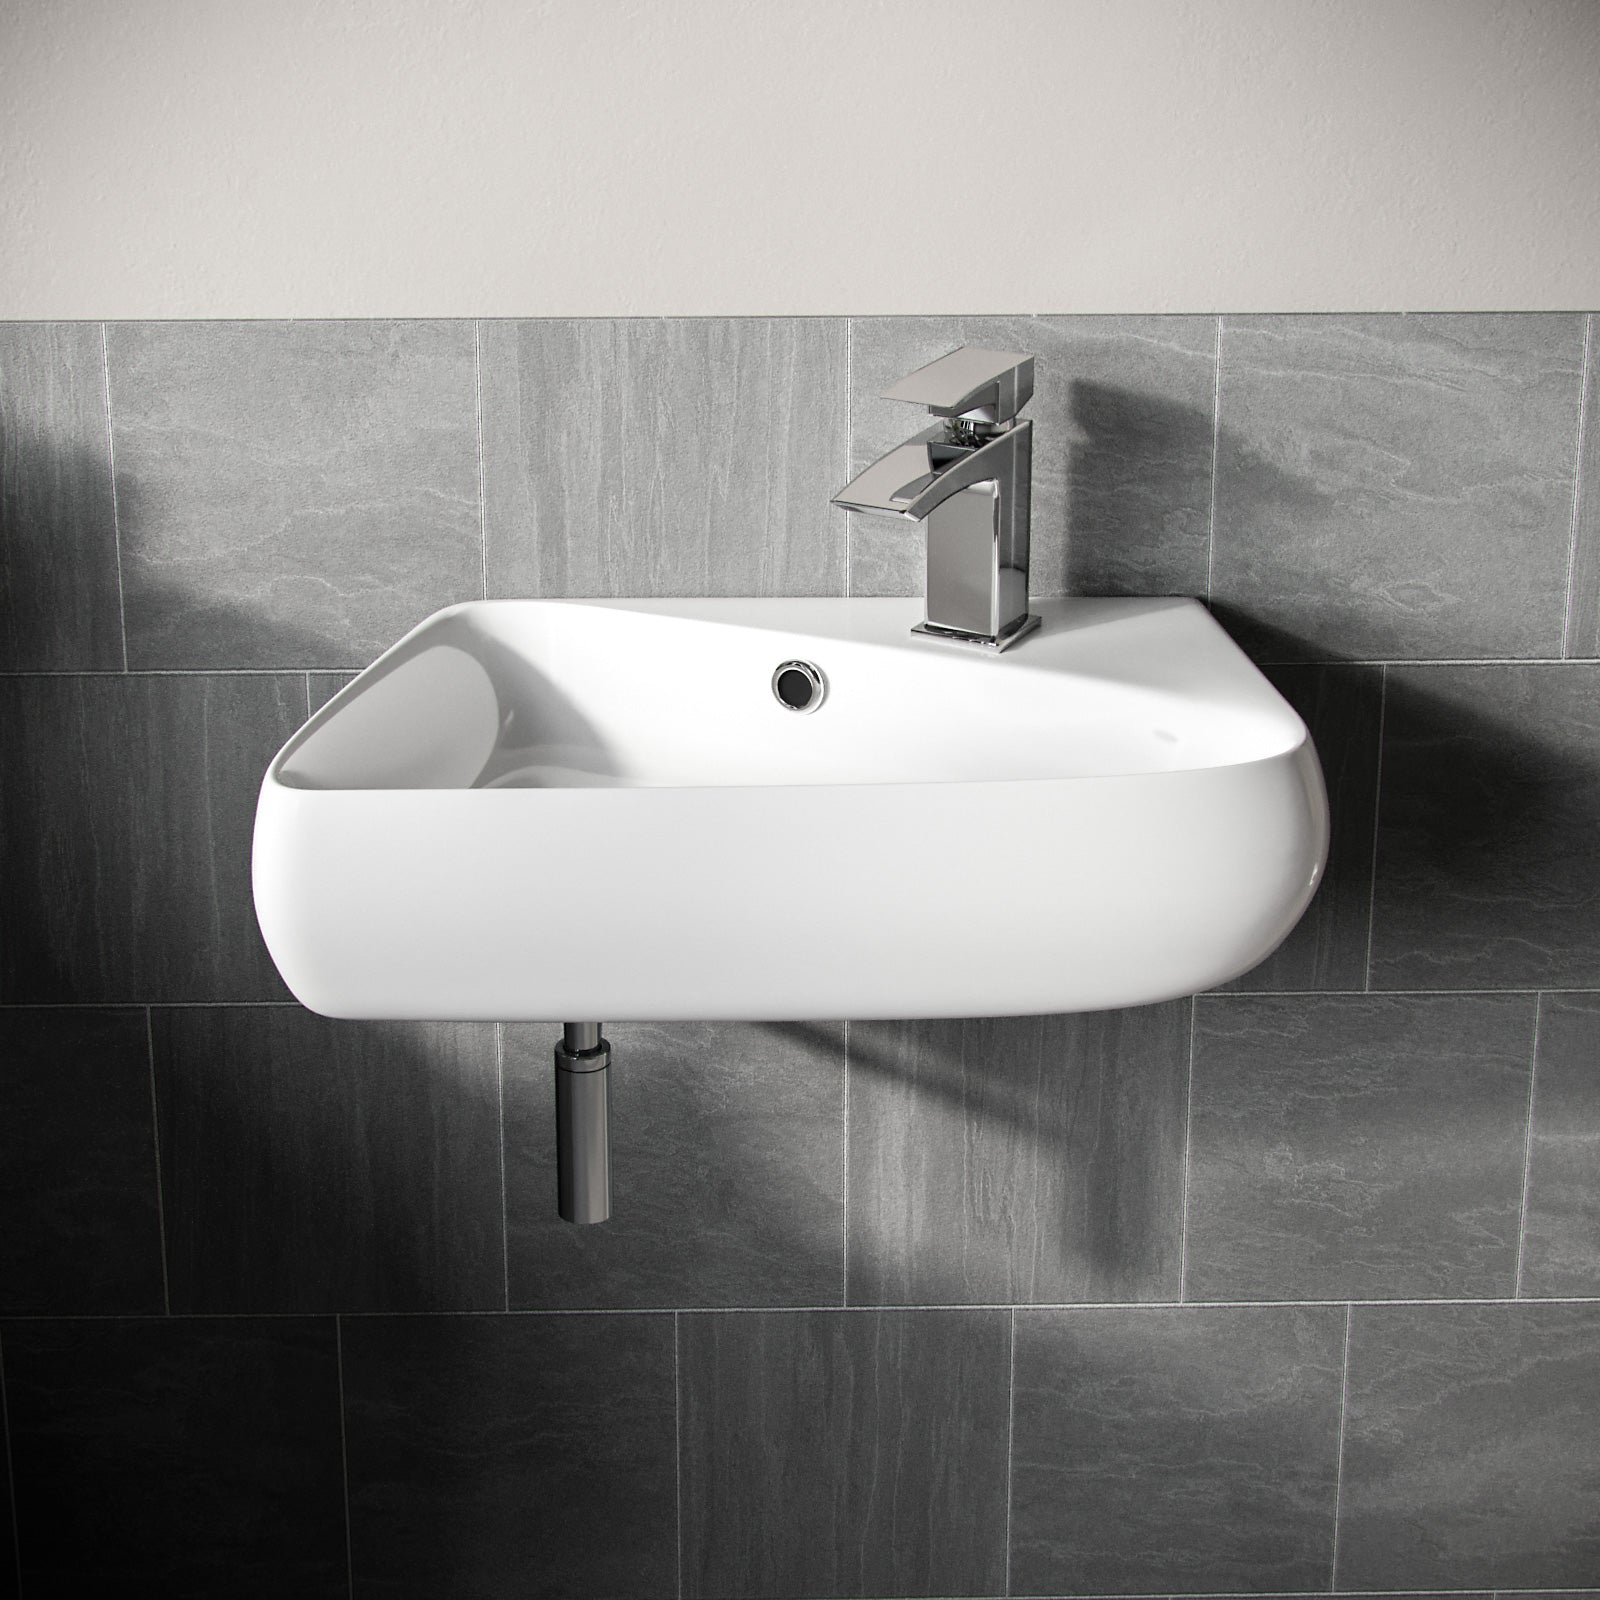 Tulla 455 x 275mm Rectangle Cloakroom Wall Hung Basin Sink